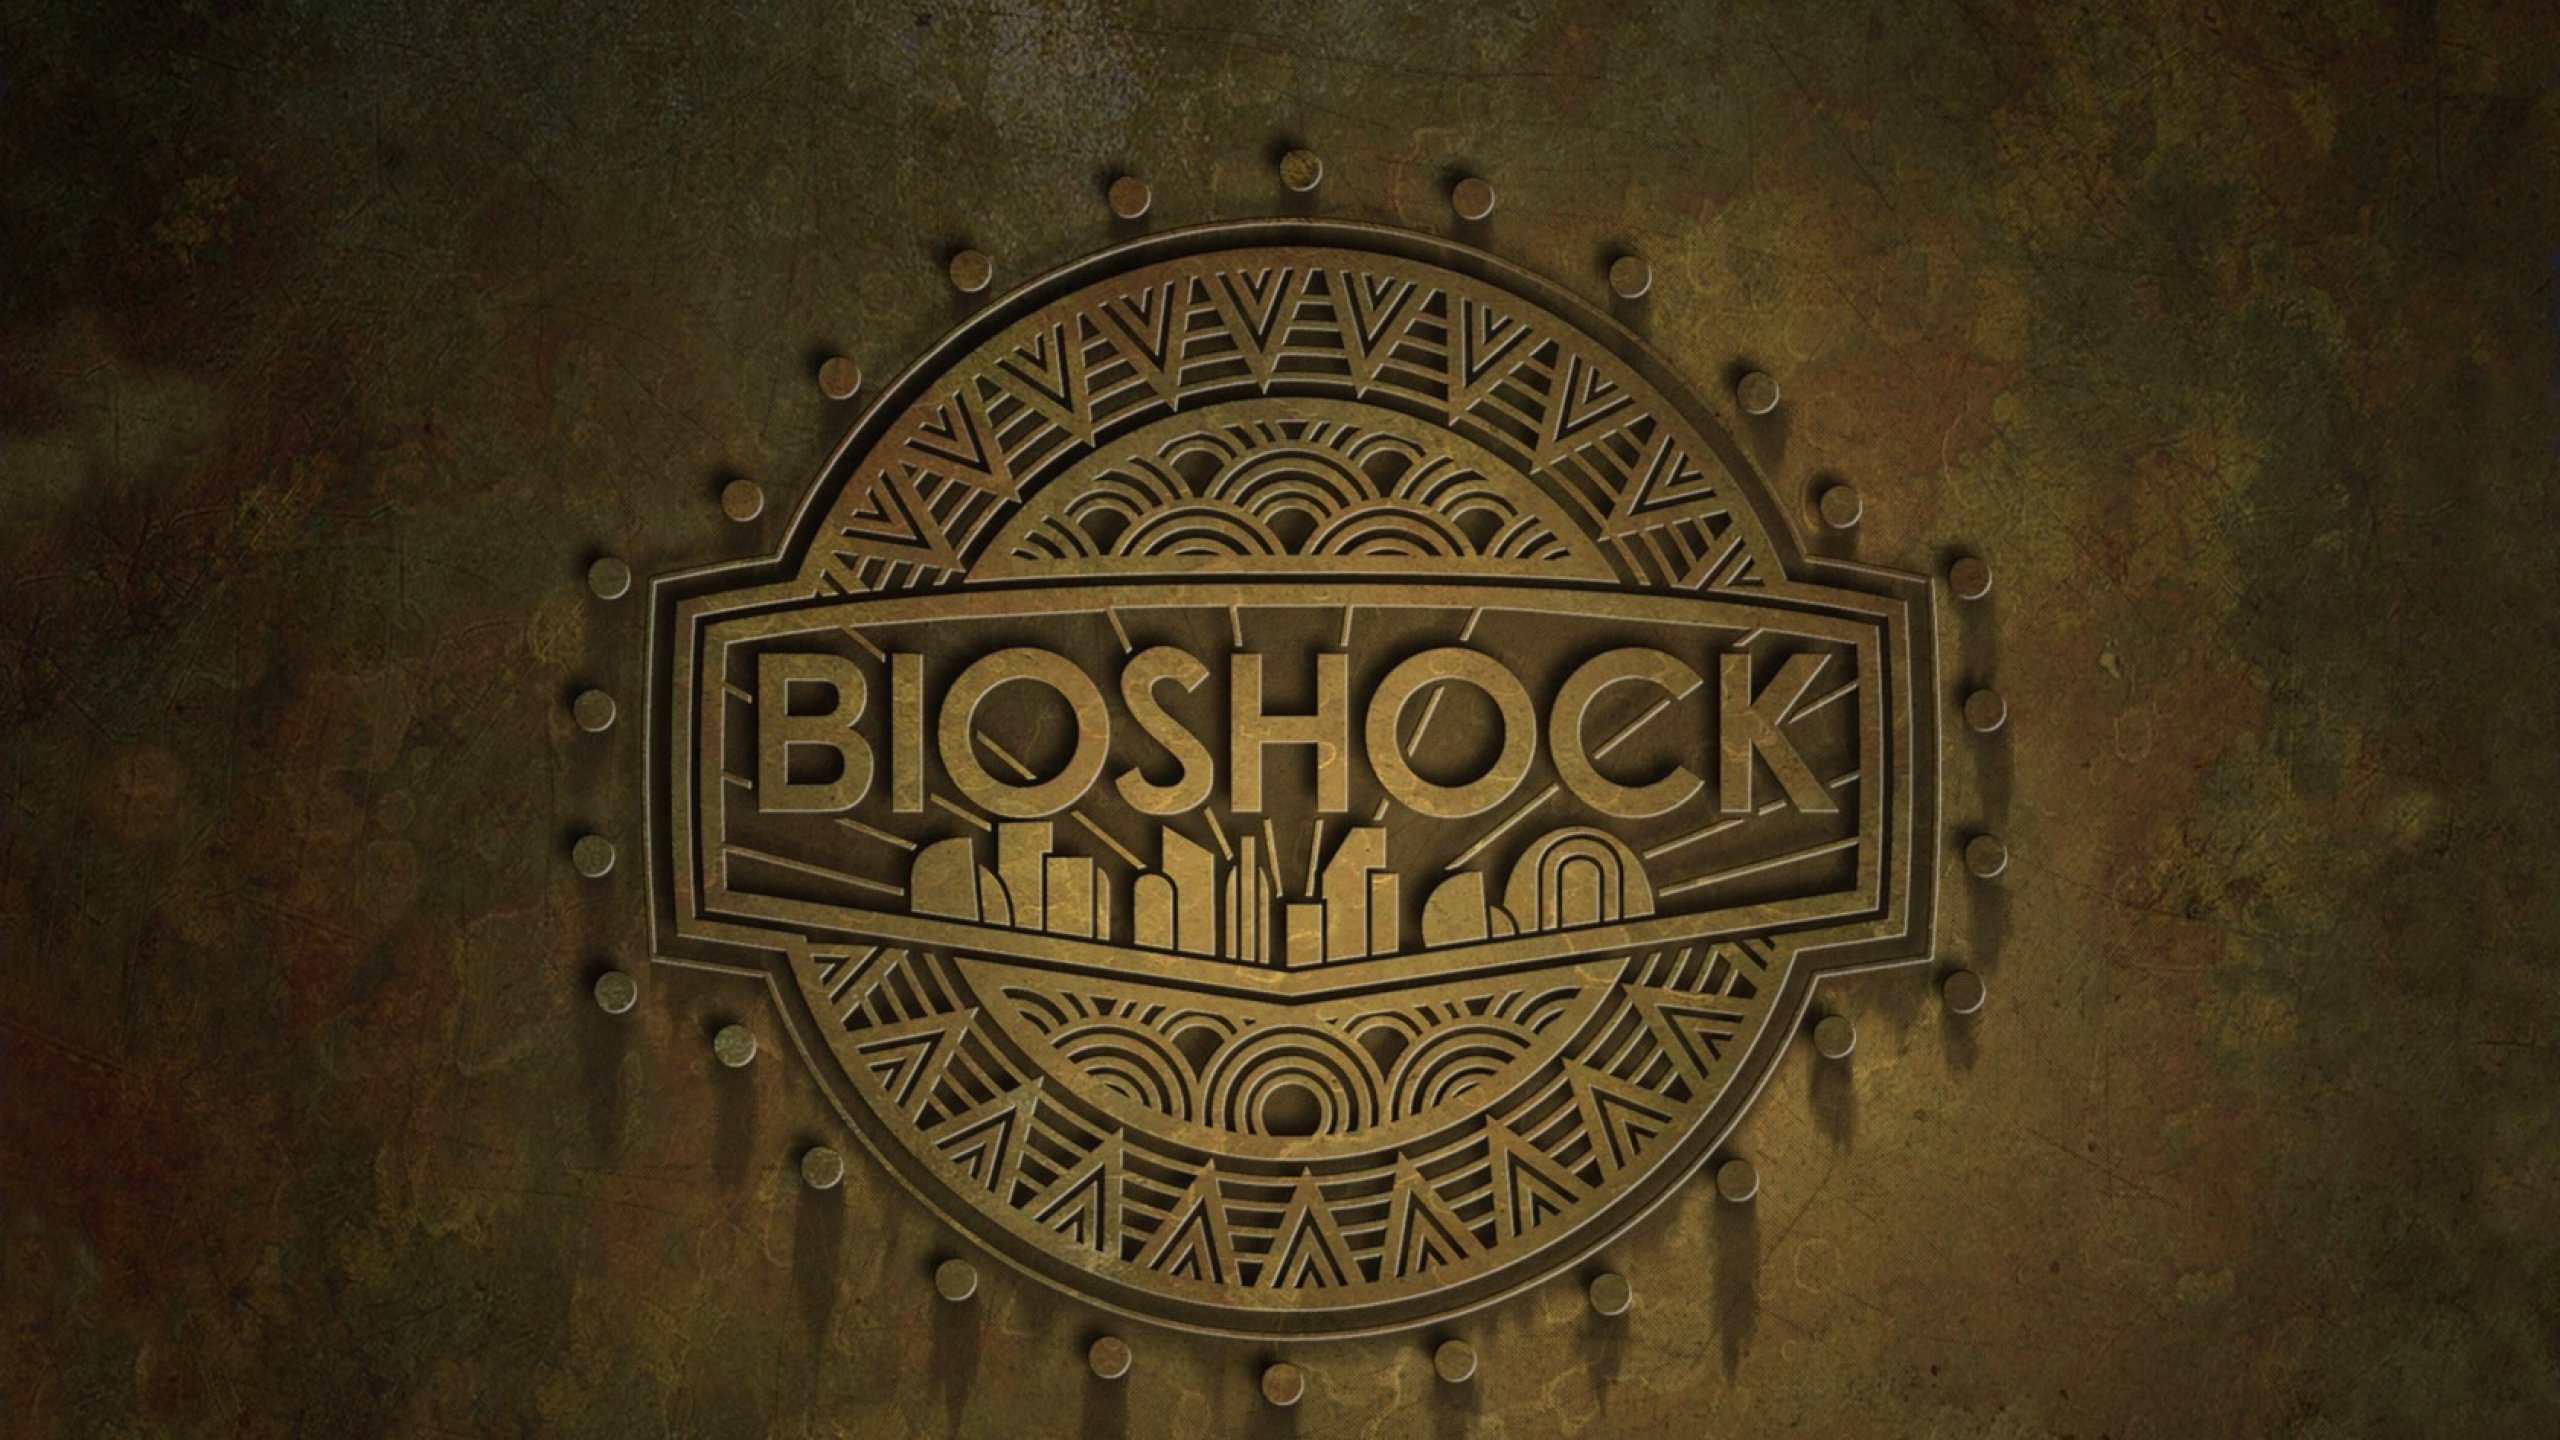 bioshock, Fantasy, Sci fi, Shooter, Action, Cyborg, Fighting, Robot, Warrior, Futuristic, Poster Wallpaper